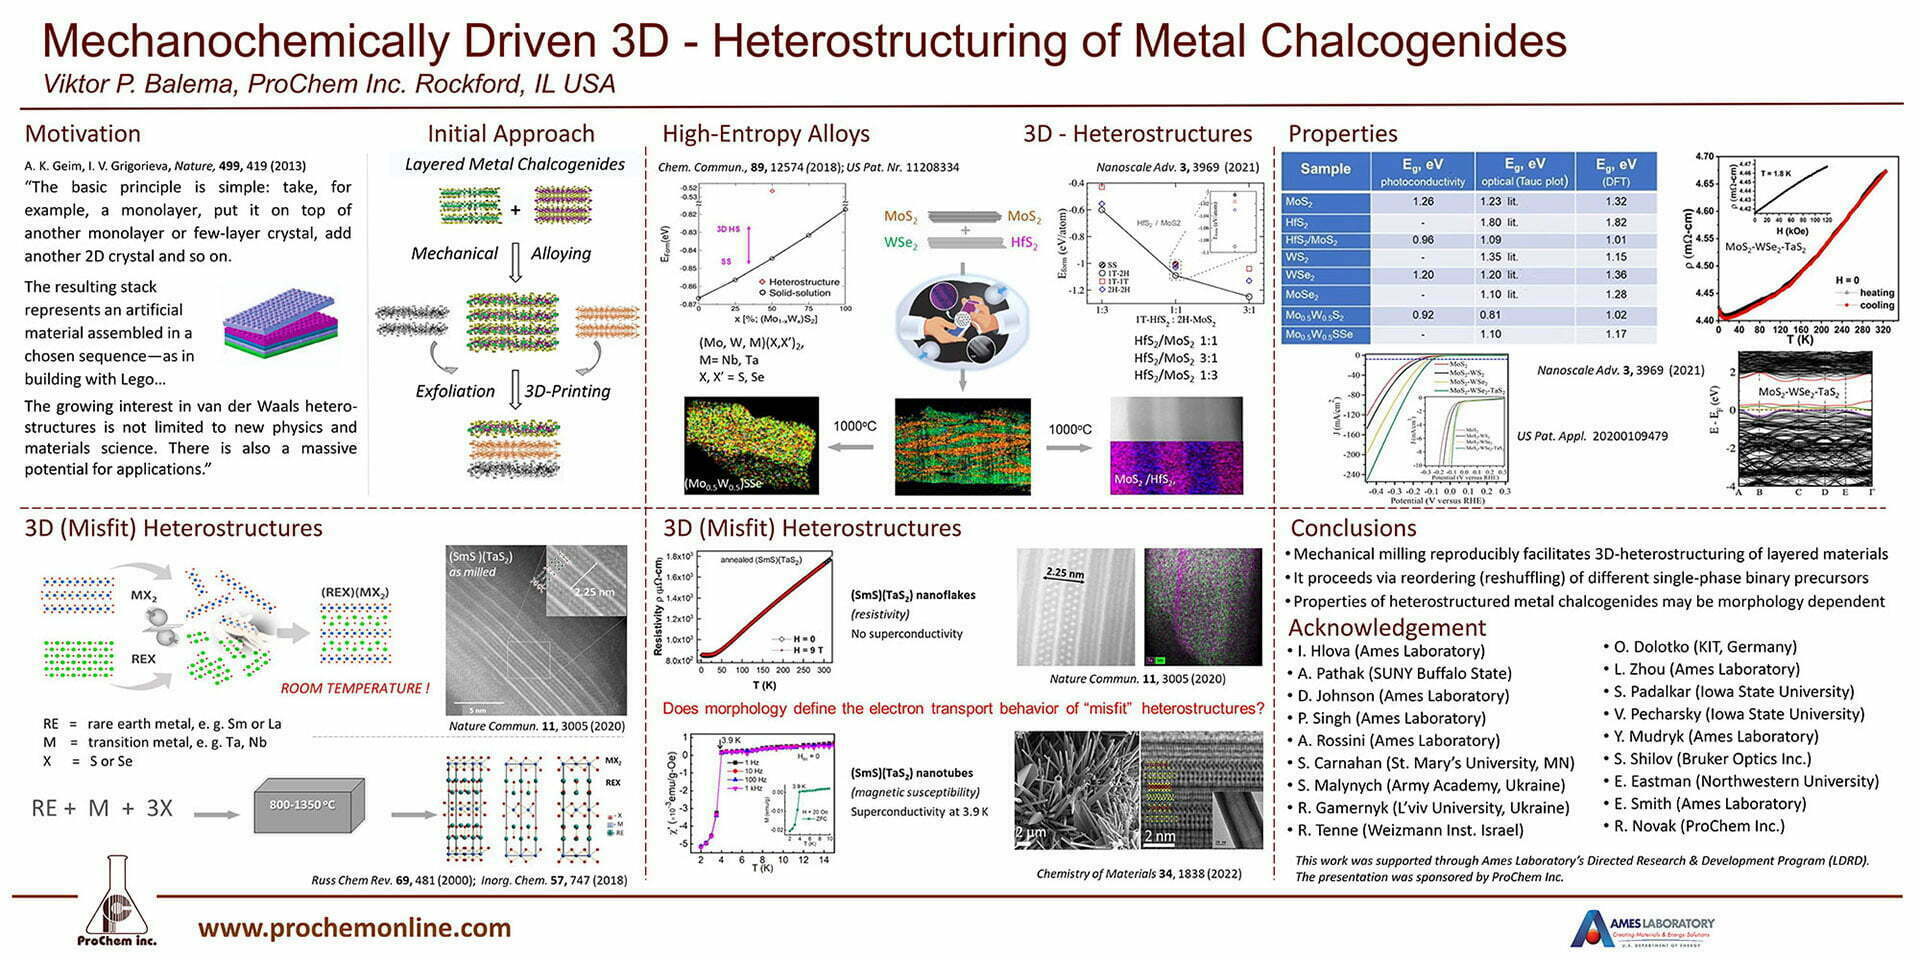 ProChem’s CTO presents Mechanochemically Driven 3D Heterostructuring of Metal Chalcogenides